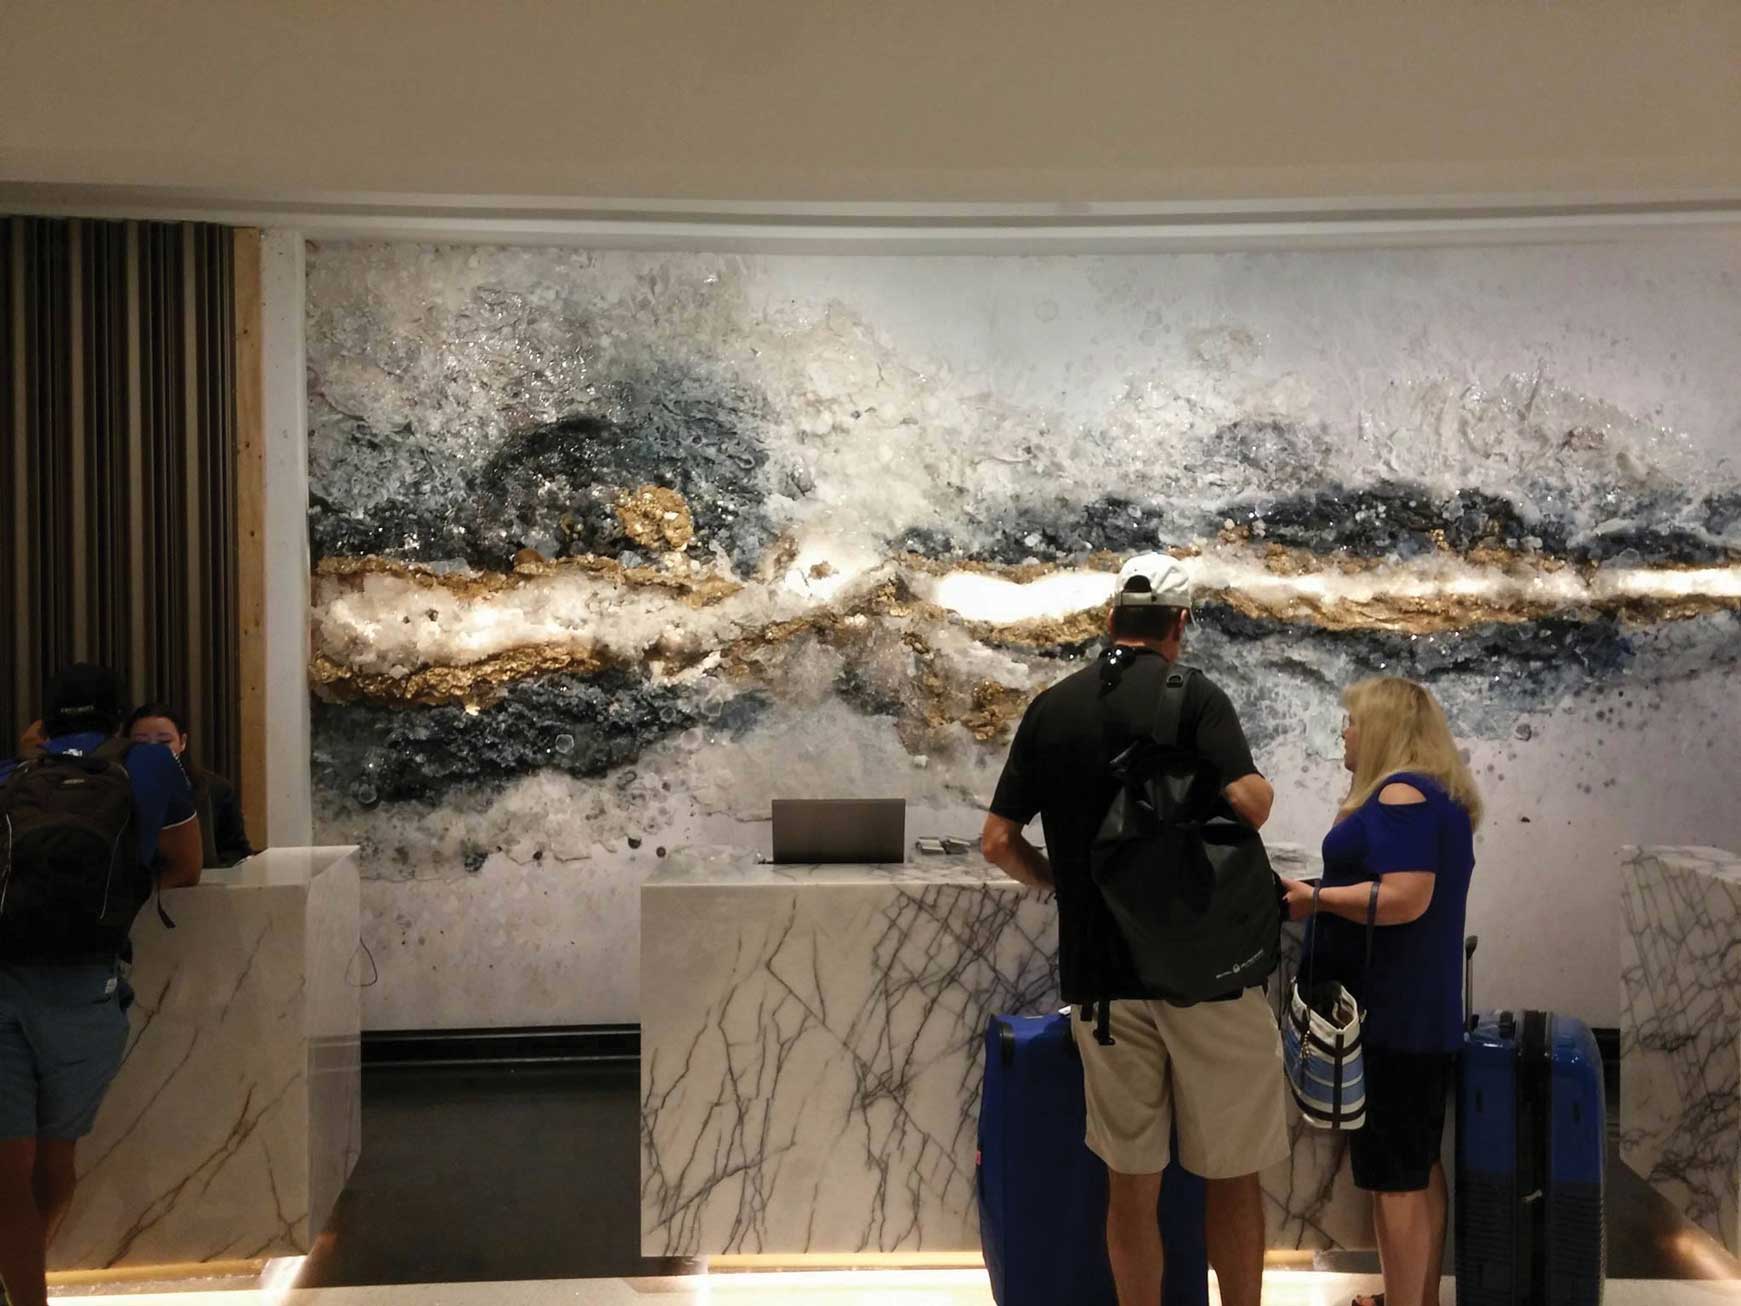 Loews Miami Beach Hotel rocks – with 100 minerals